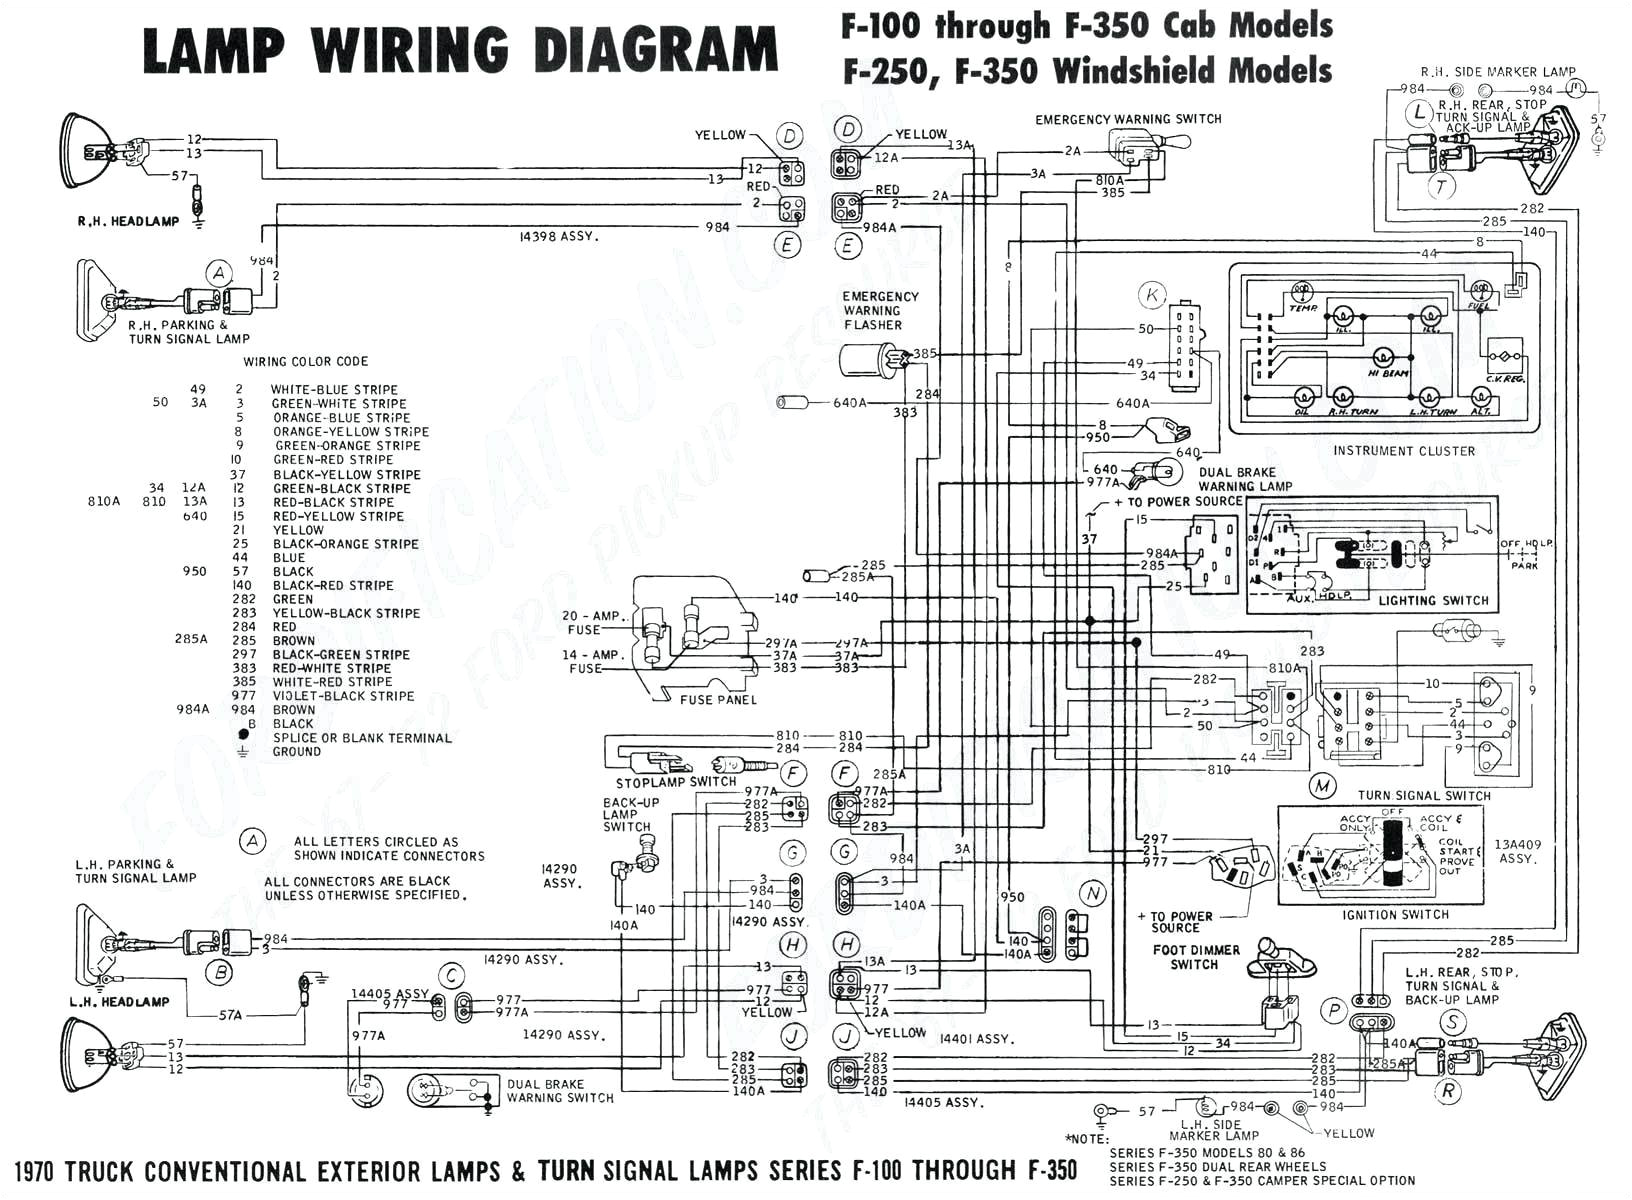 webasto thermo top c wiring diagram new webasto thermo top c wiring diagram 2018 delorean relay